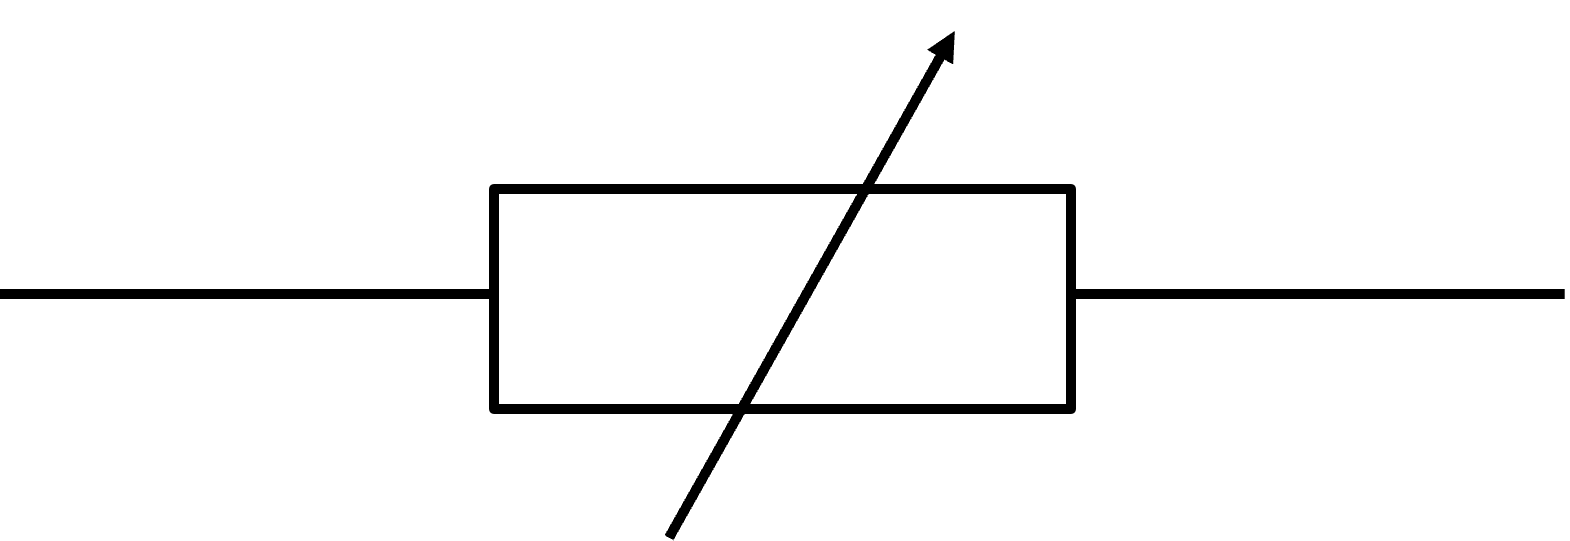 variable resistors symbol